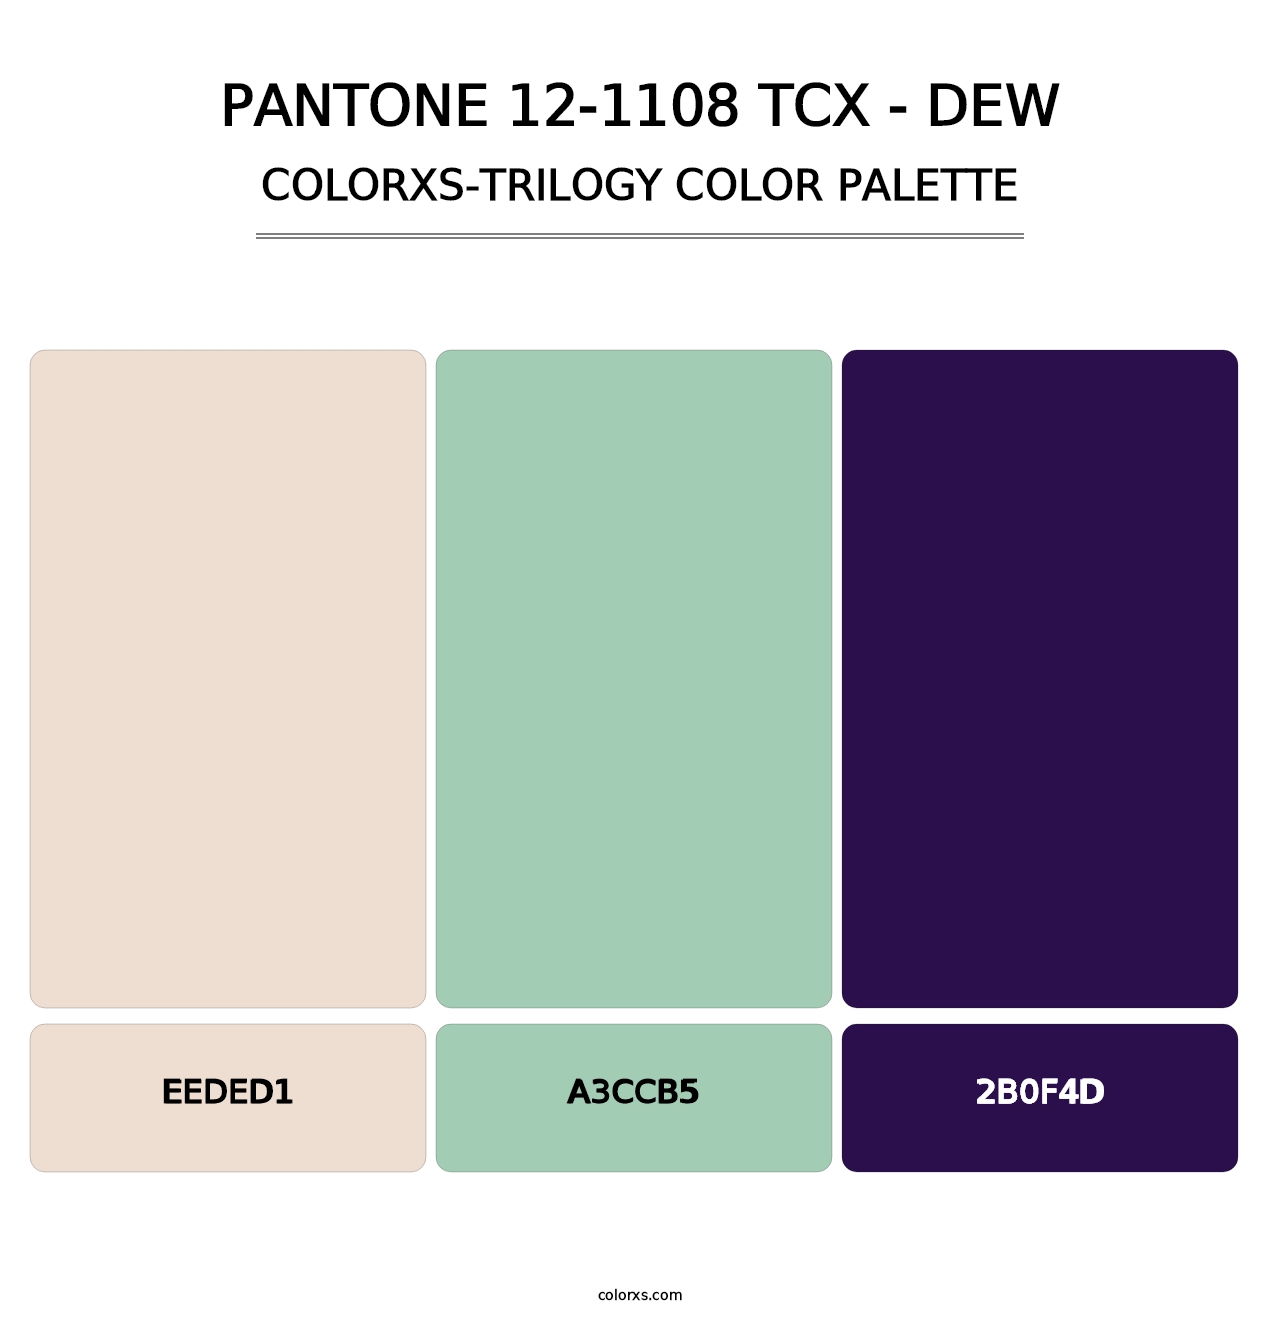 PANTONE 12-1108 TCX - Dew - Colorxs Trilogy Palette